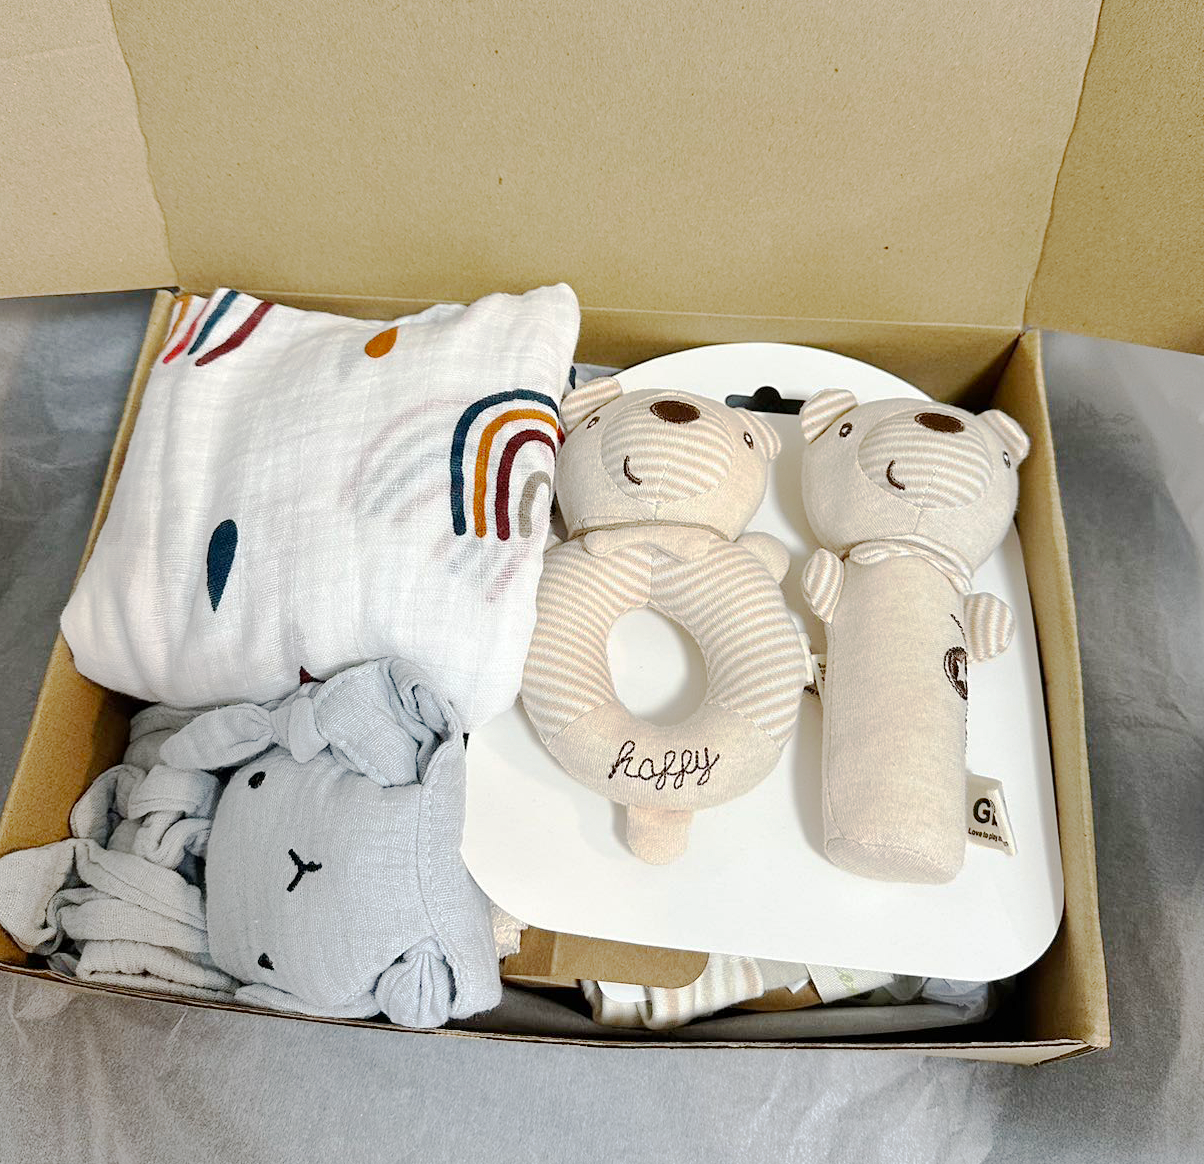 Joyful Arrival: Delightful Surprise for Newborn Gift Set - Taylorson